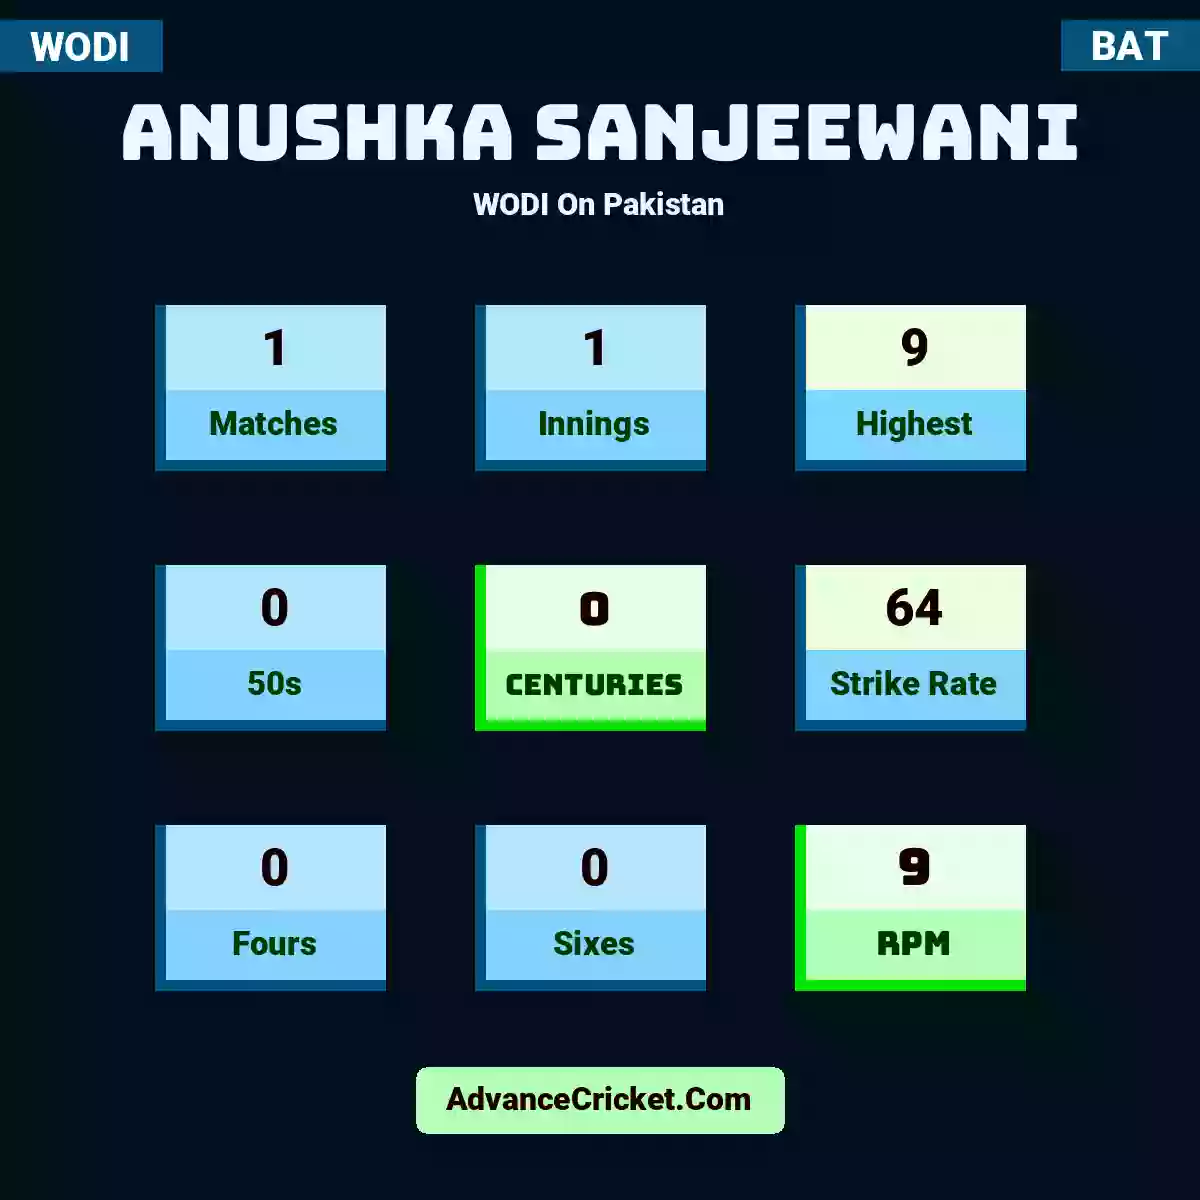 Anushka Sanjeewani WODI  On Pakistan, Anushka Sanjeewani played 1 matches, scored 9 runs as highest, 0 half-centuries, and 0 centuries, with a strike rate of 64. A.Sanjeewani hit 0 fours and 0 sixes, with an RPM of 9.